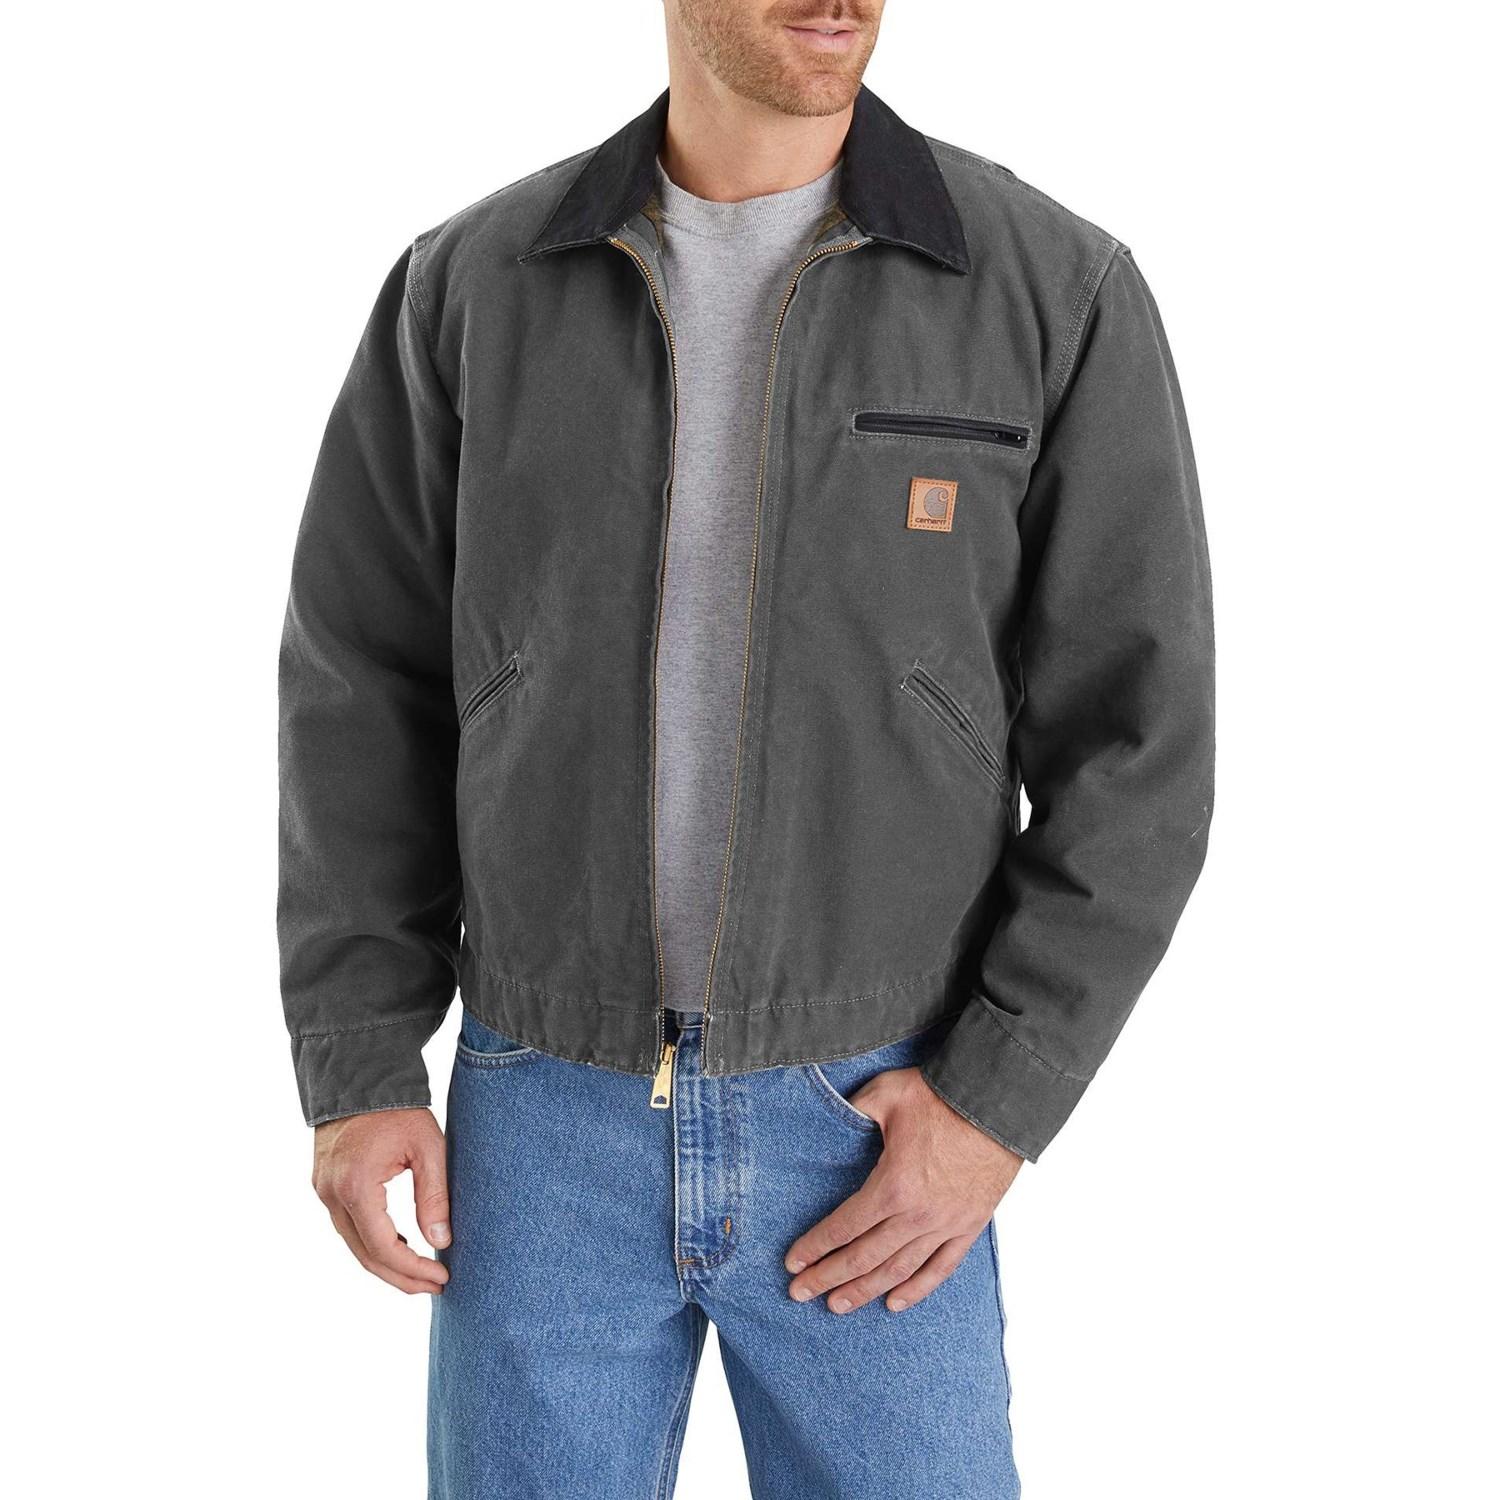 Carhartt Cotton J97 Sandstone Detroit Jacket for Men - Lyst